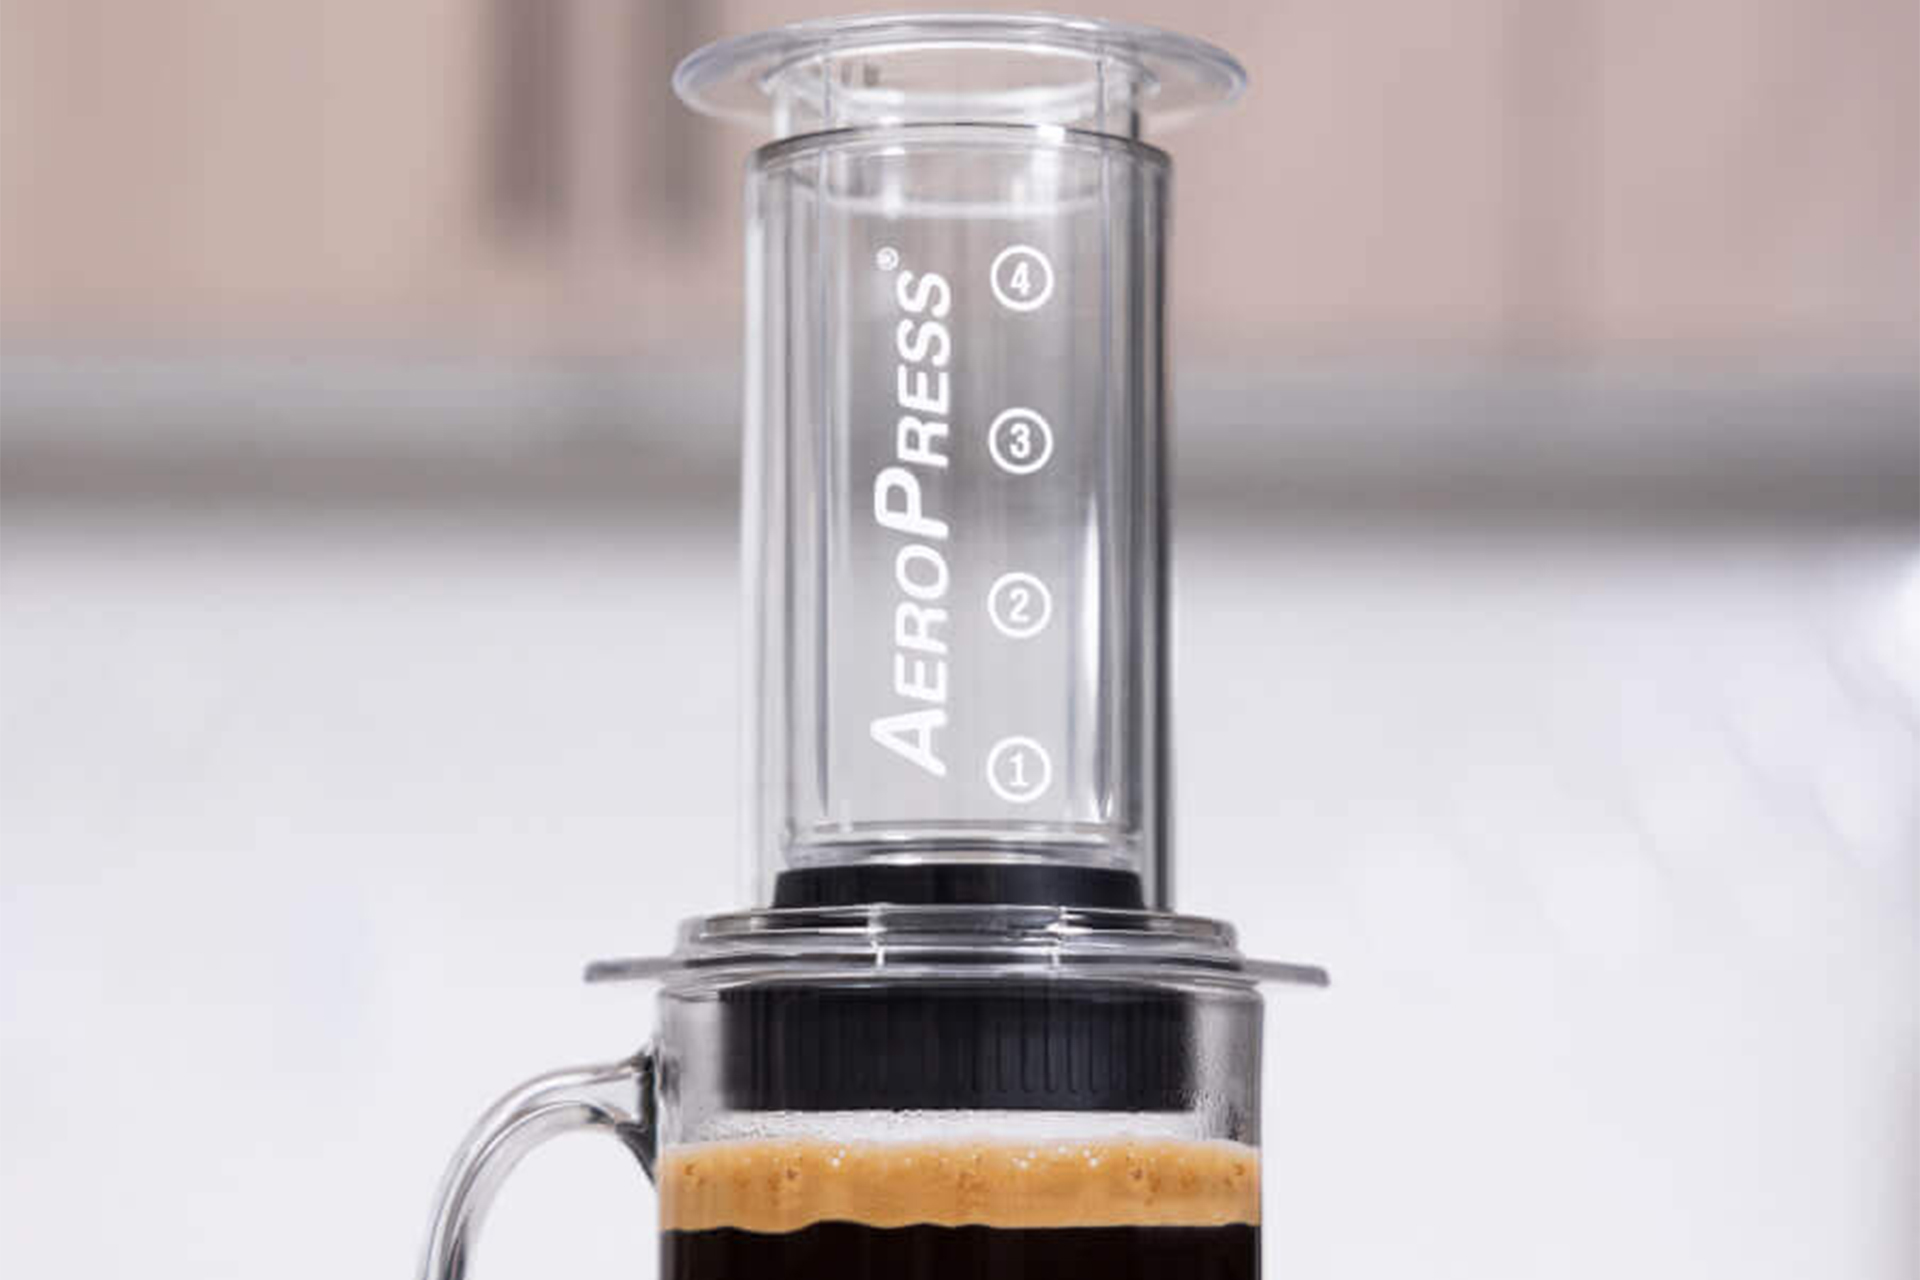 AeroPress Updates Original Coffee Press